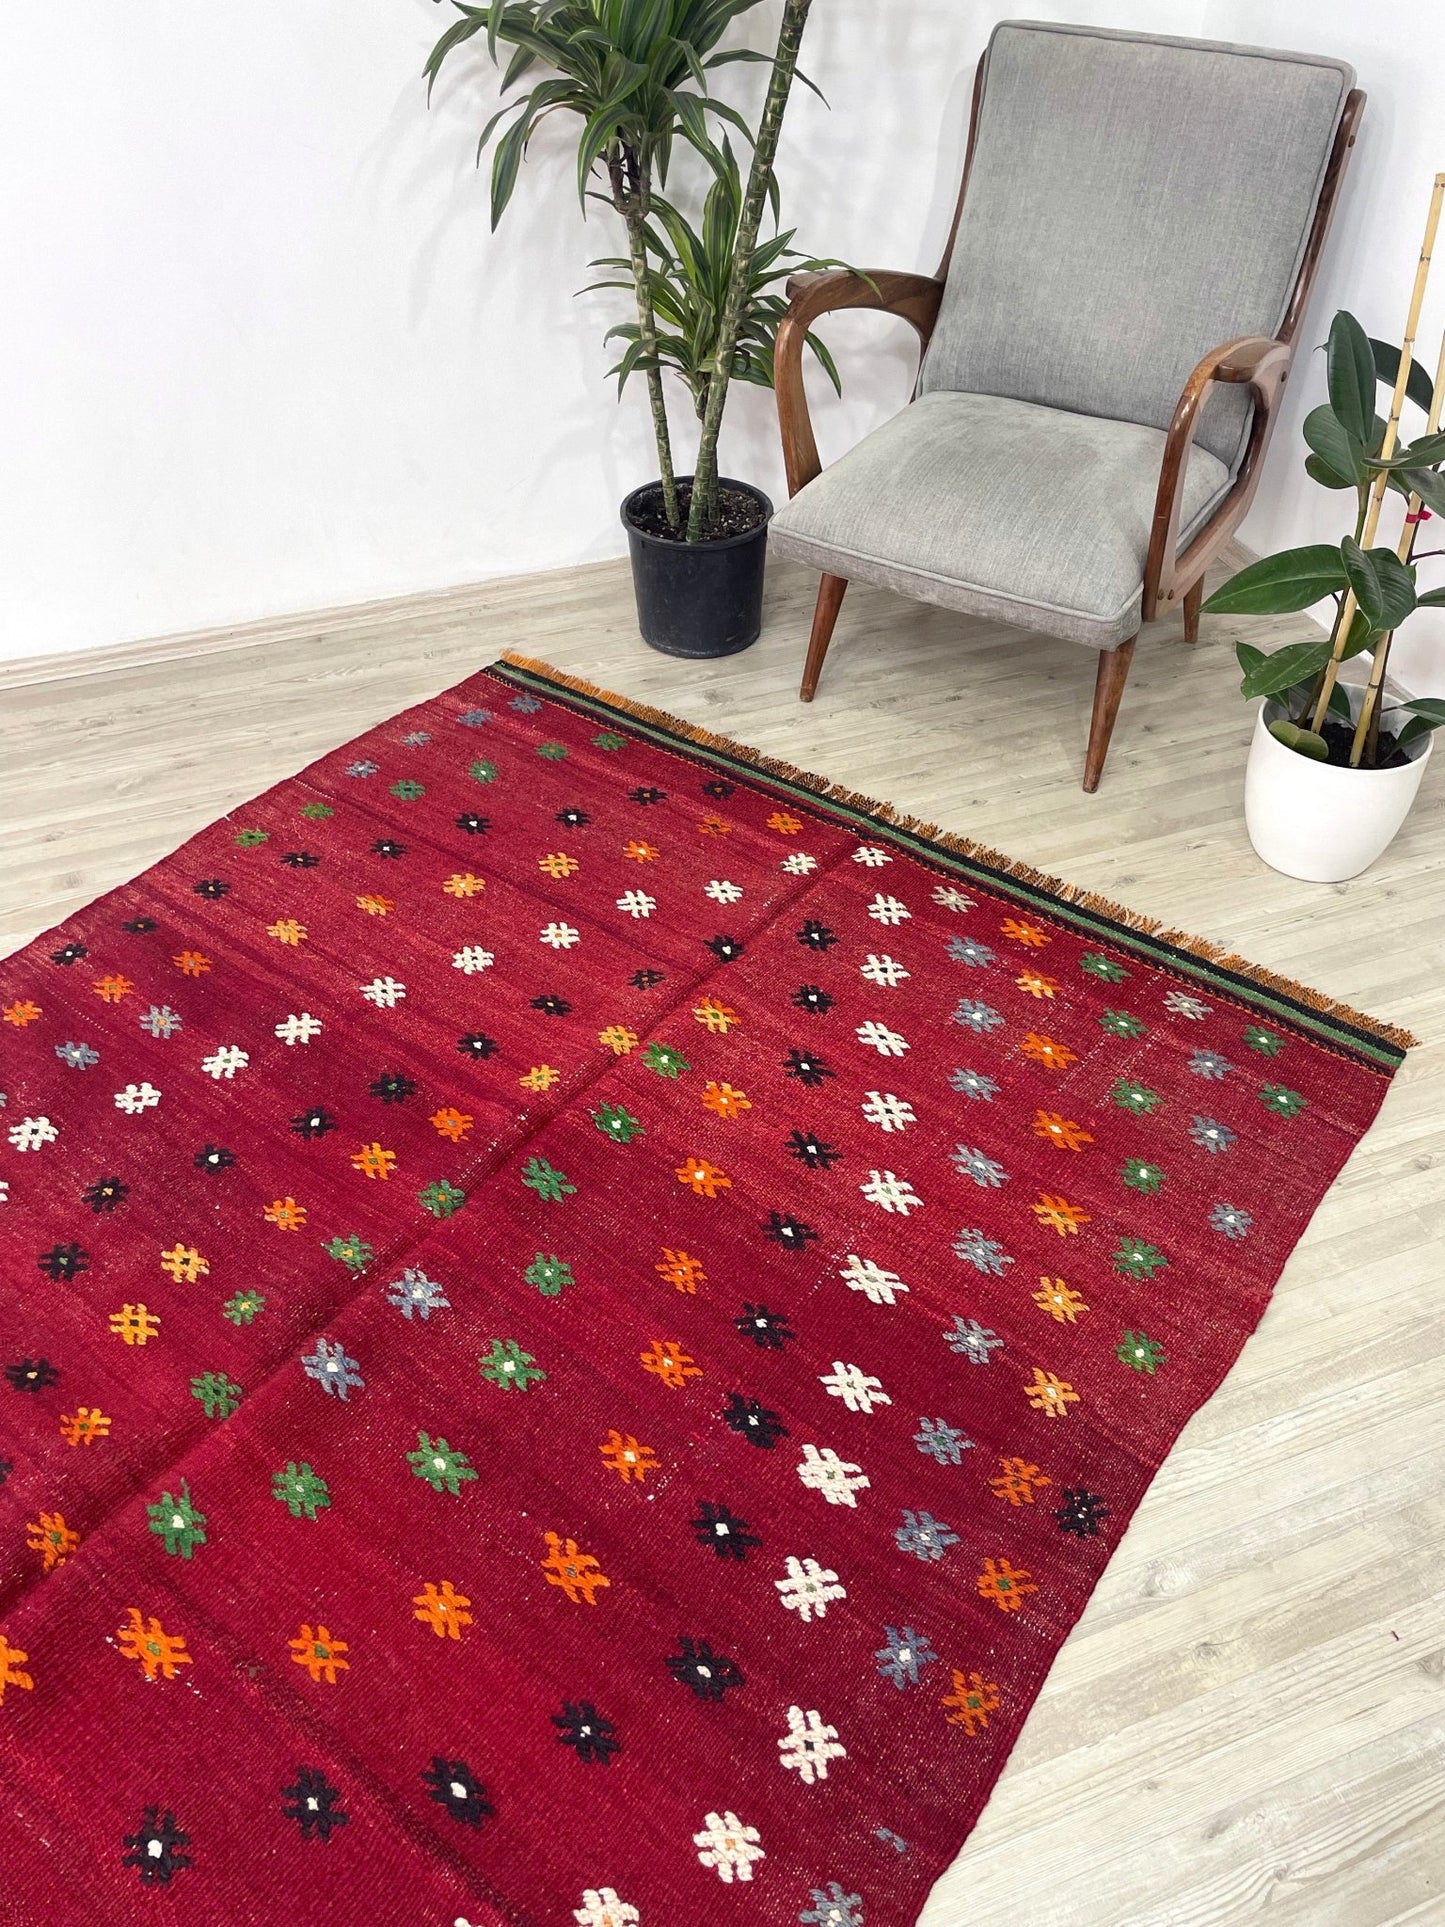 pergamum turkish kilim rug shop san francisco bay area berkeley palo alto buy rug online shopping